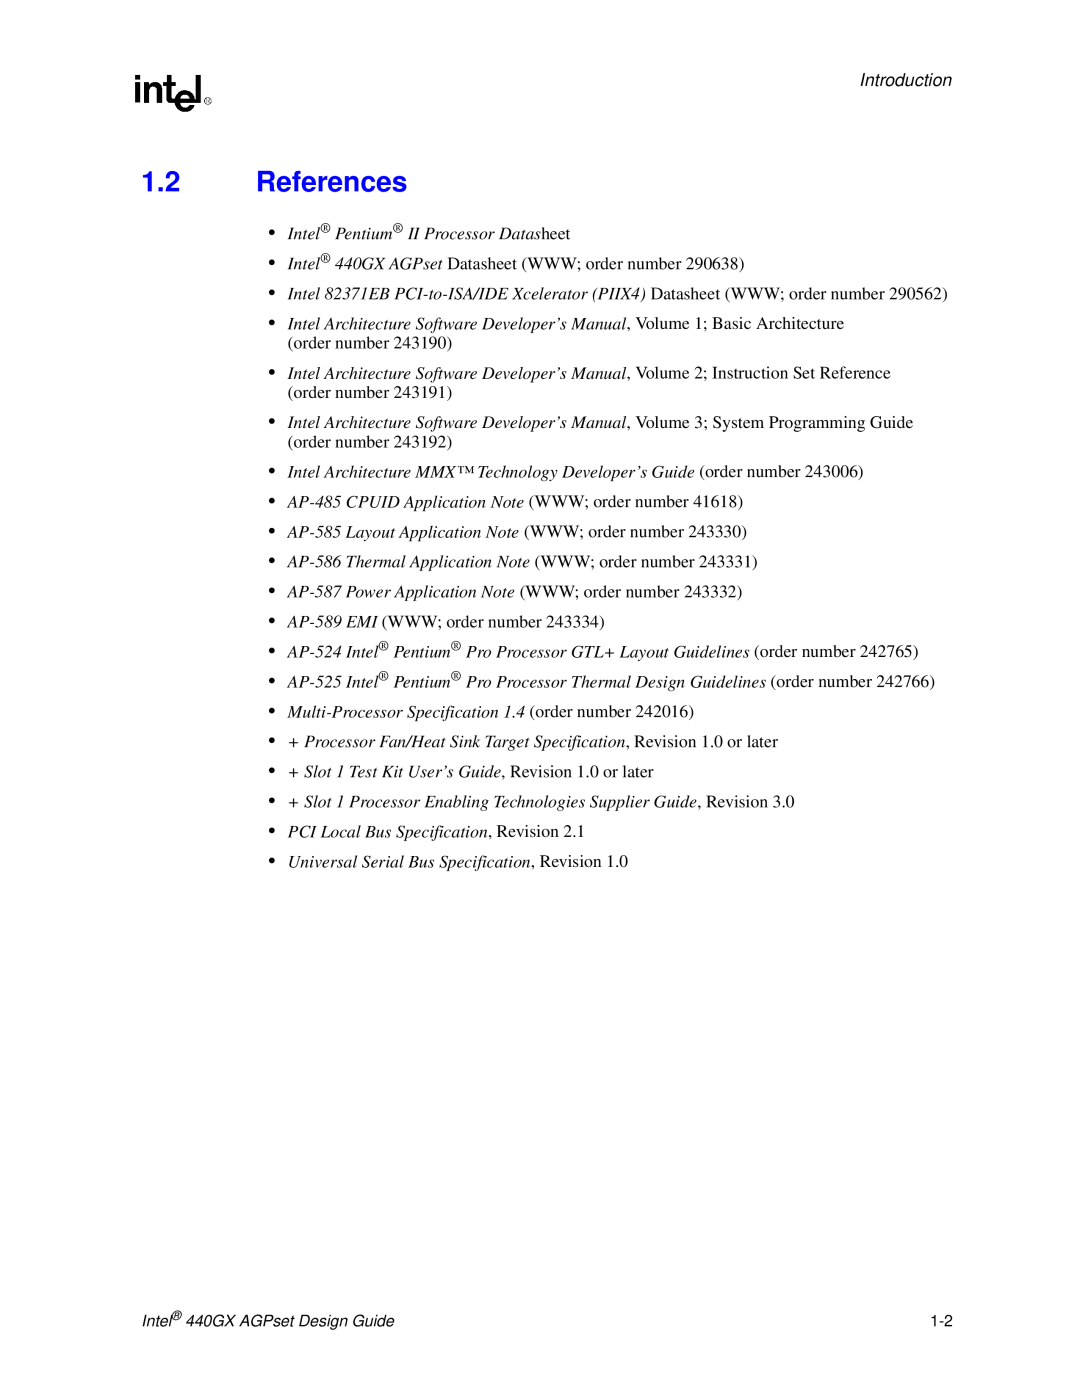 Intel manual References, Introduction, Intel 440GX AGPset Datasheet WWW order number, AP-589 EMI WWW order number 